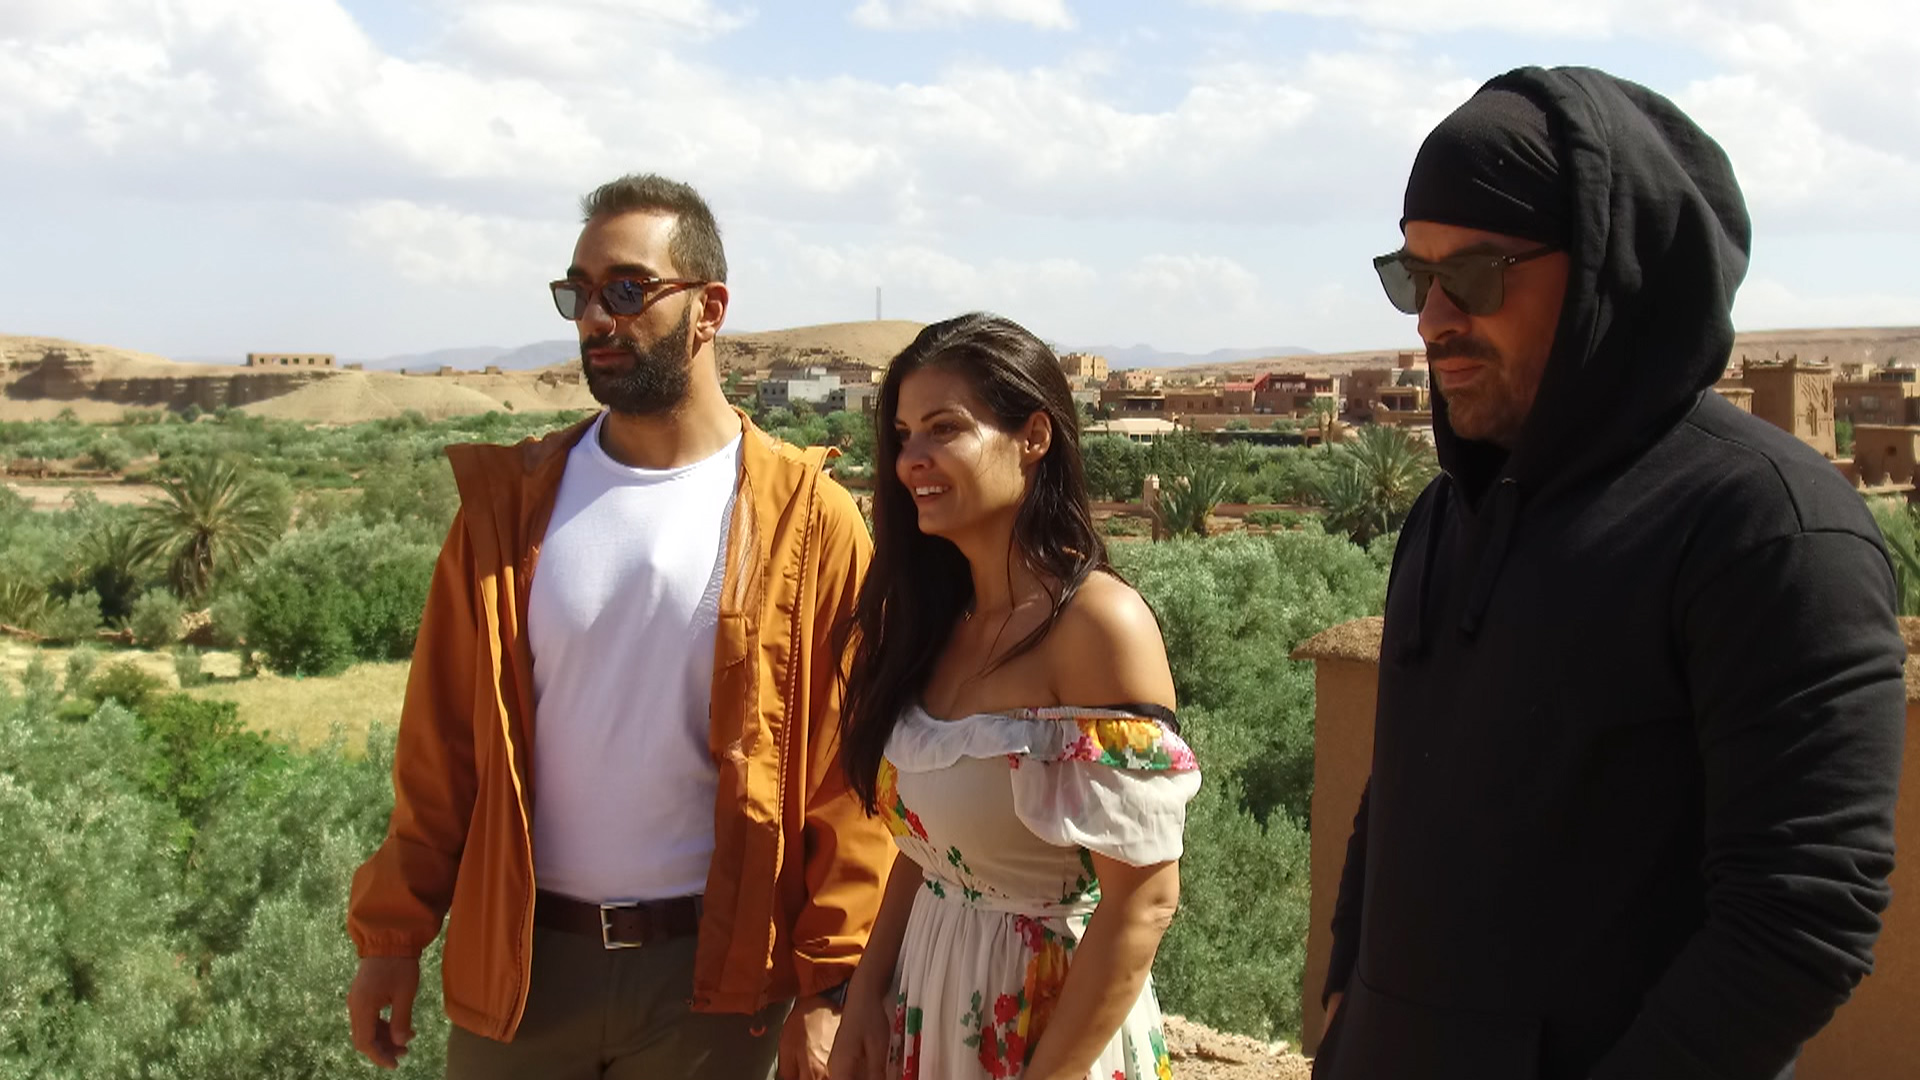 Celebrity Travel: Η περιπέτεια με την Μαρία Κορινθίου και του Γιάννη Αϊβάζη στο Μαρόκο συνεχίζεται